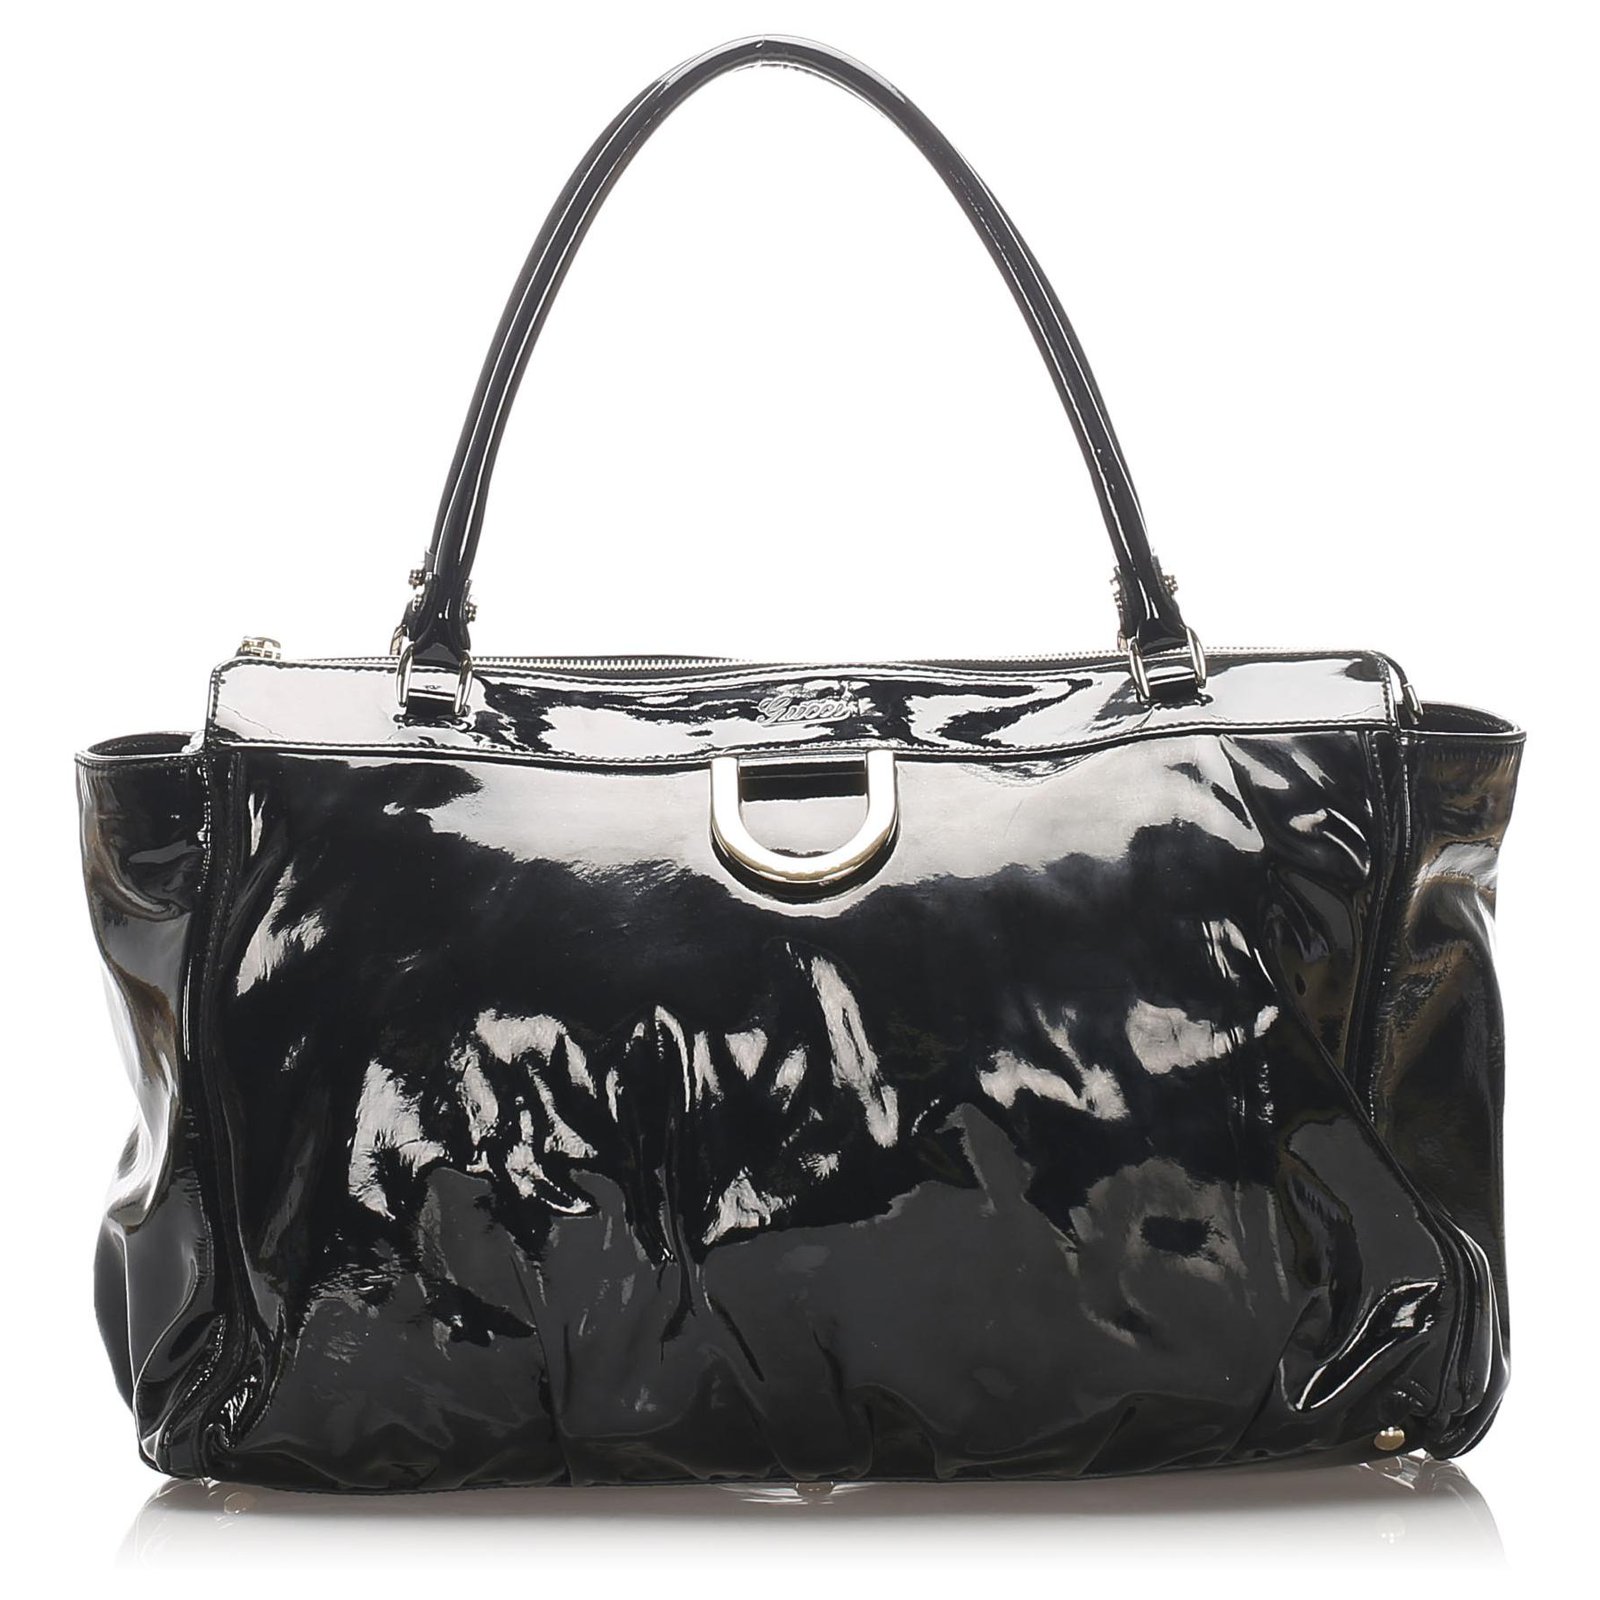 gucci black patent leather handbag